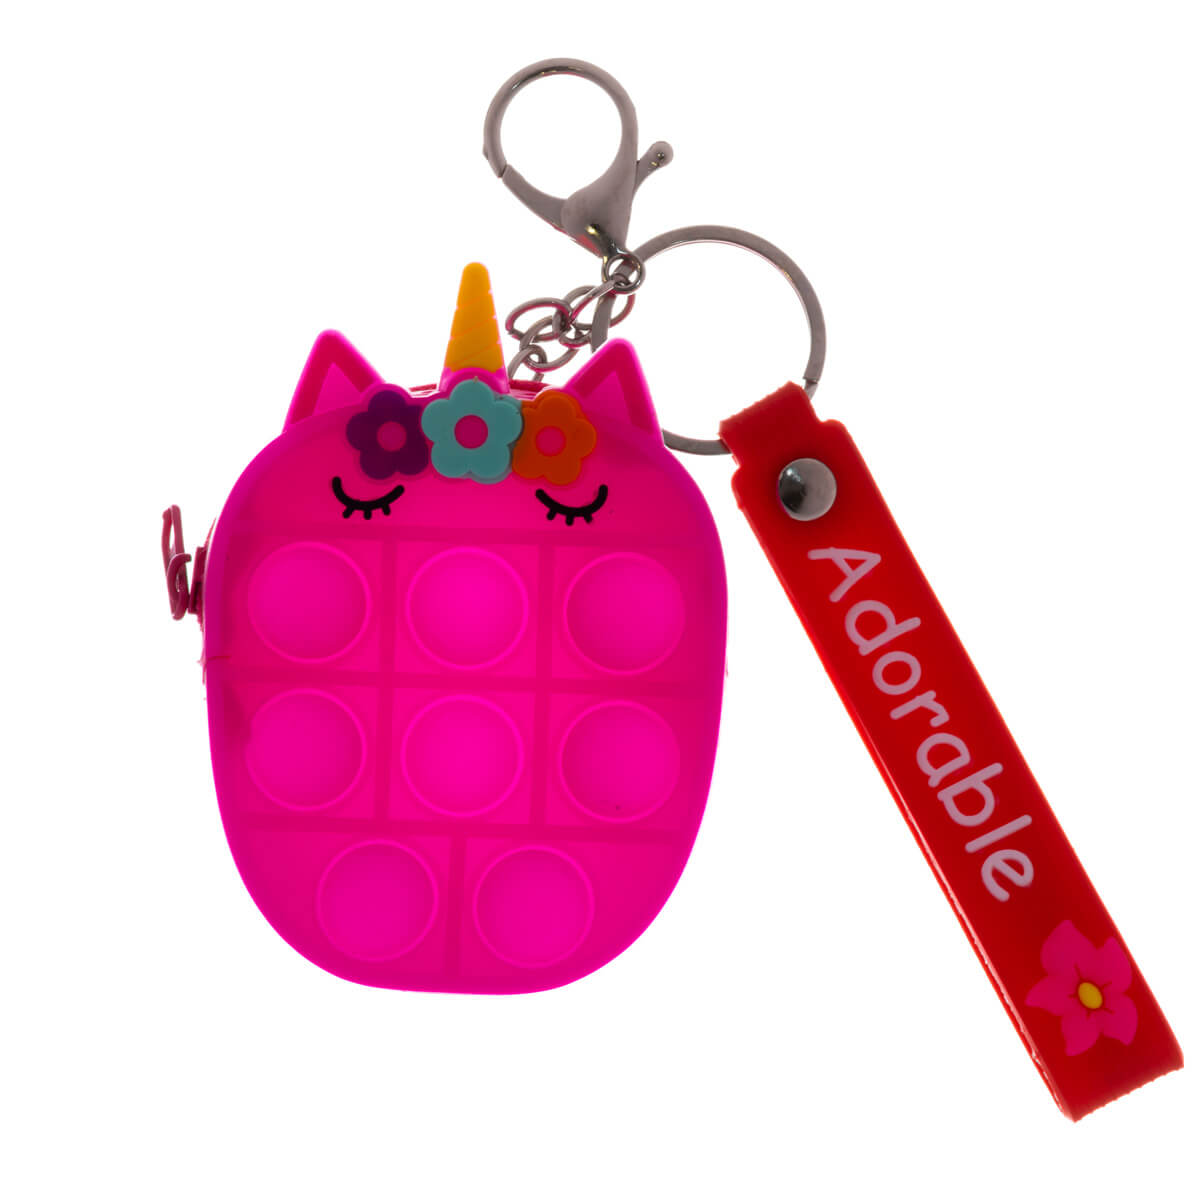 Unicorn pop it keychain and purse